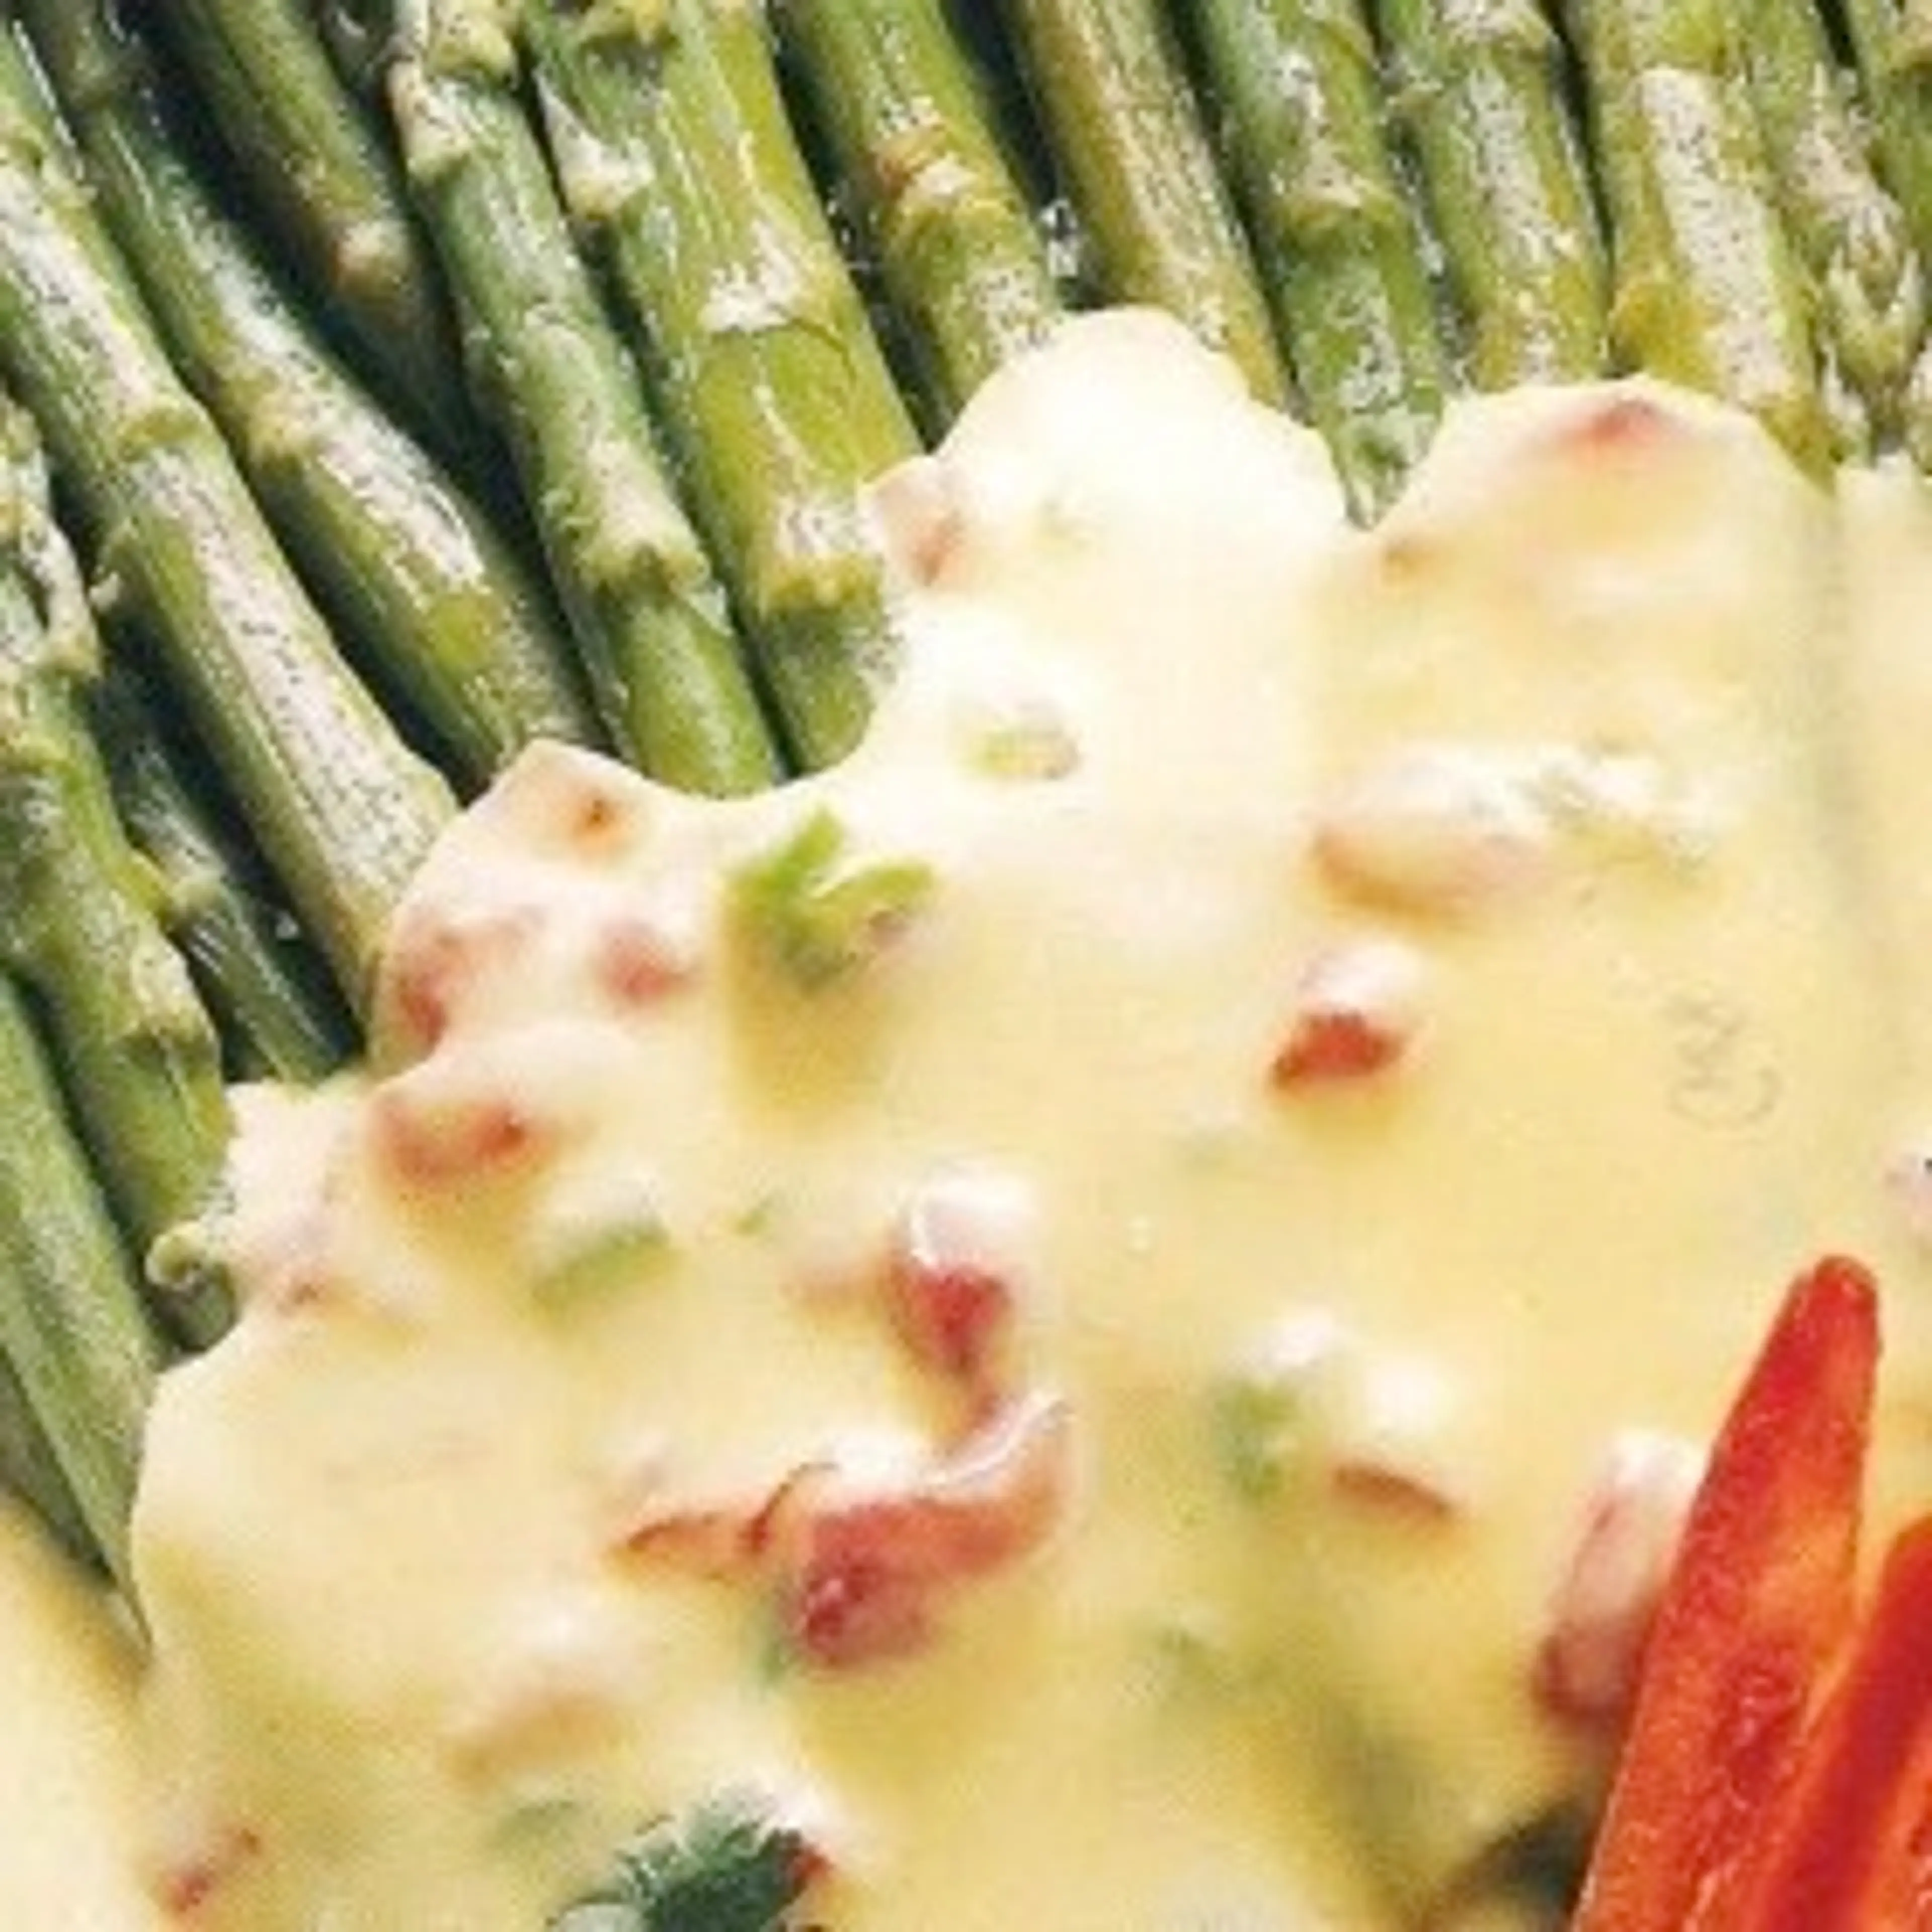 Asparagus with Jalapeno Hollandaise Sauce